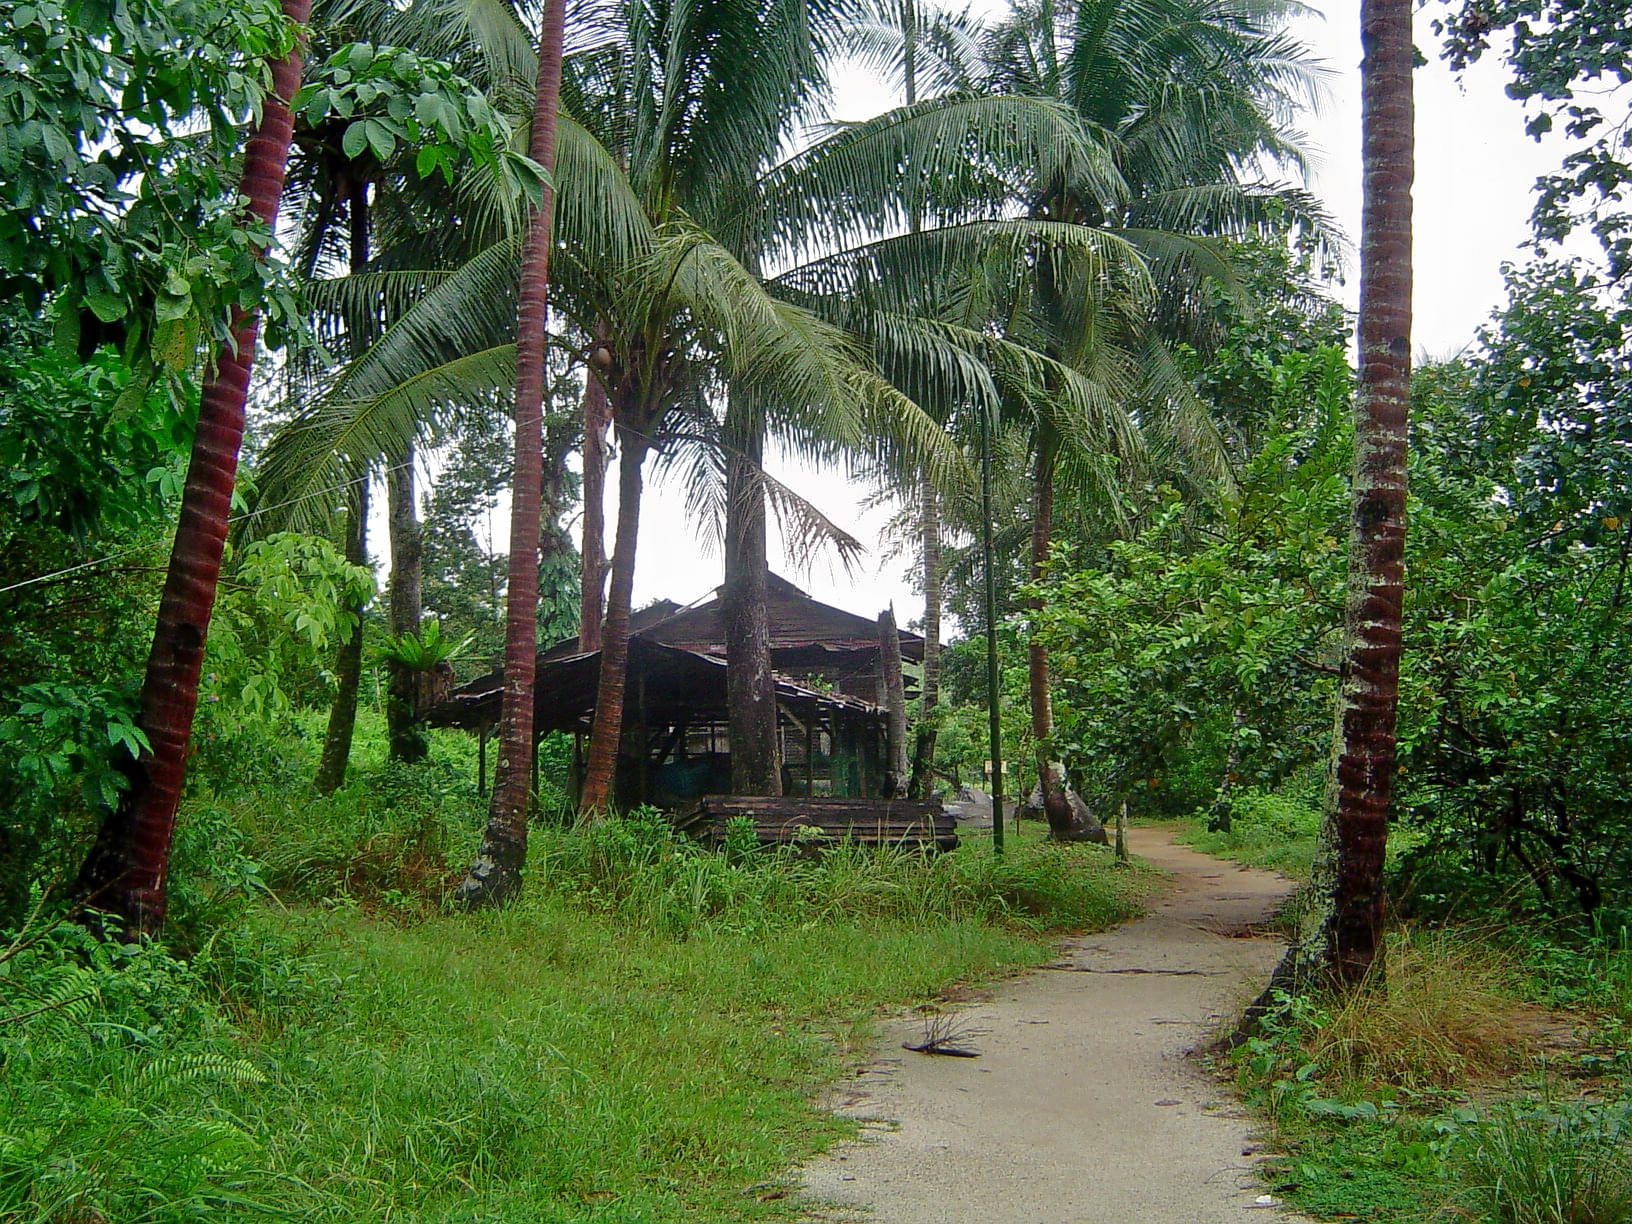 Pulau Ubin's Puaka Hill Overview